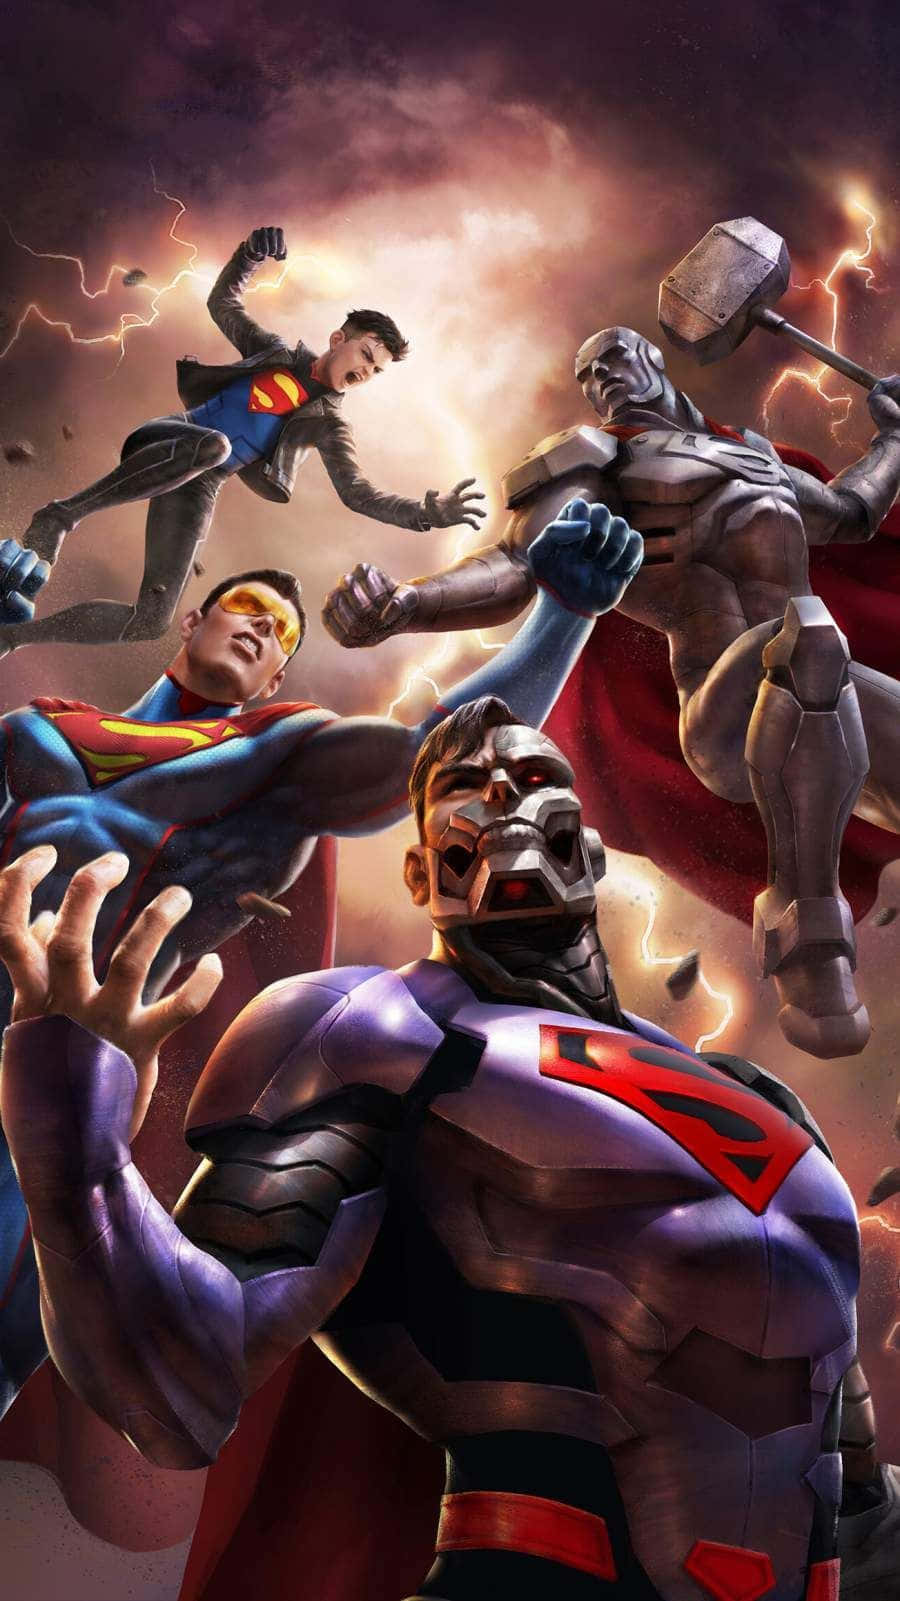 Marvel and DC fans unite! Wallpaper